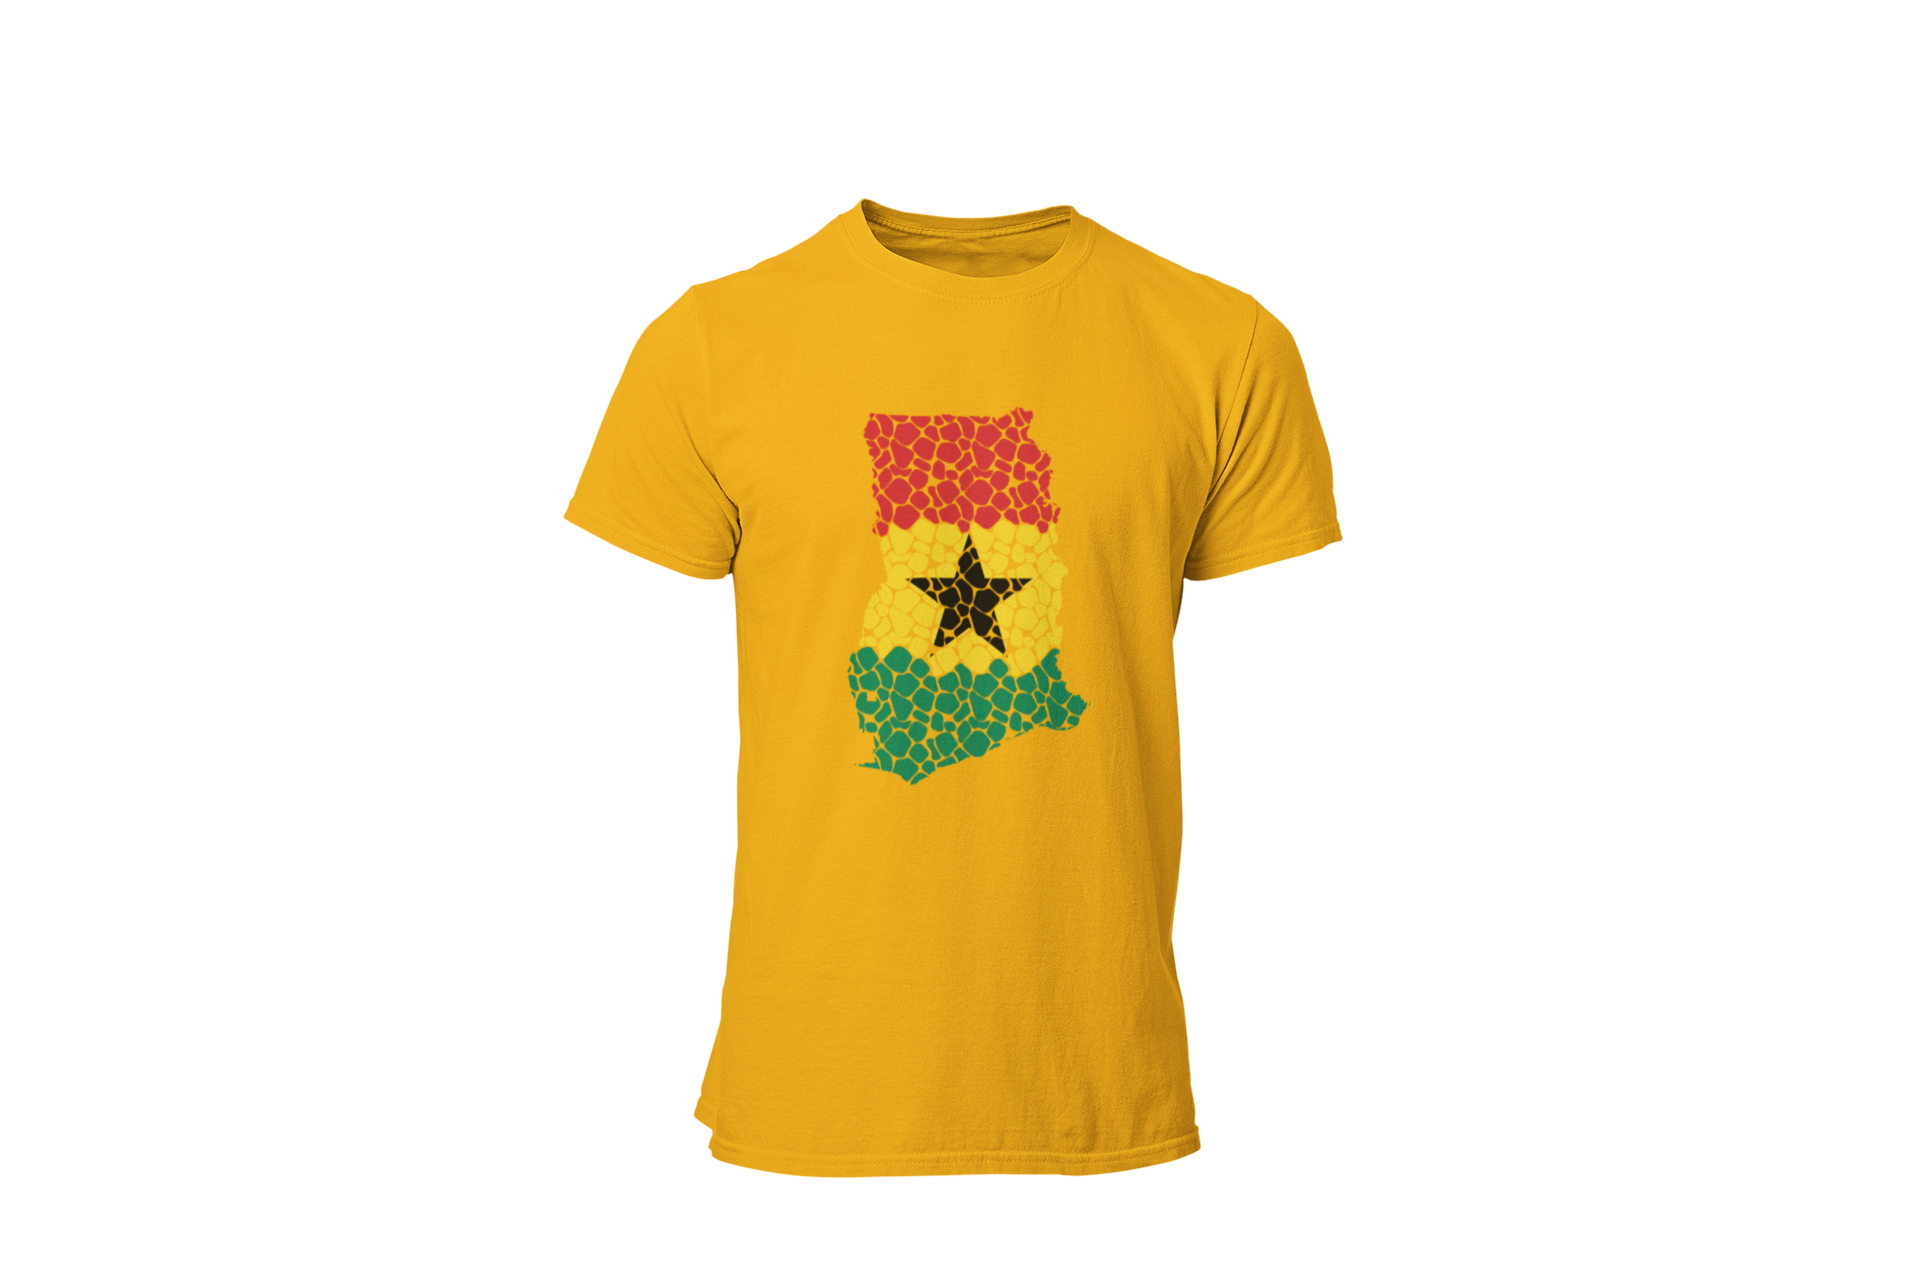 From the Soils of Ghana T-shirt